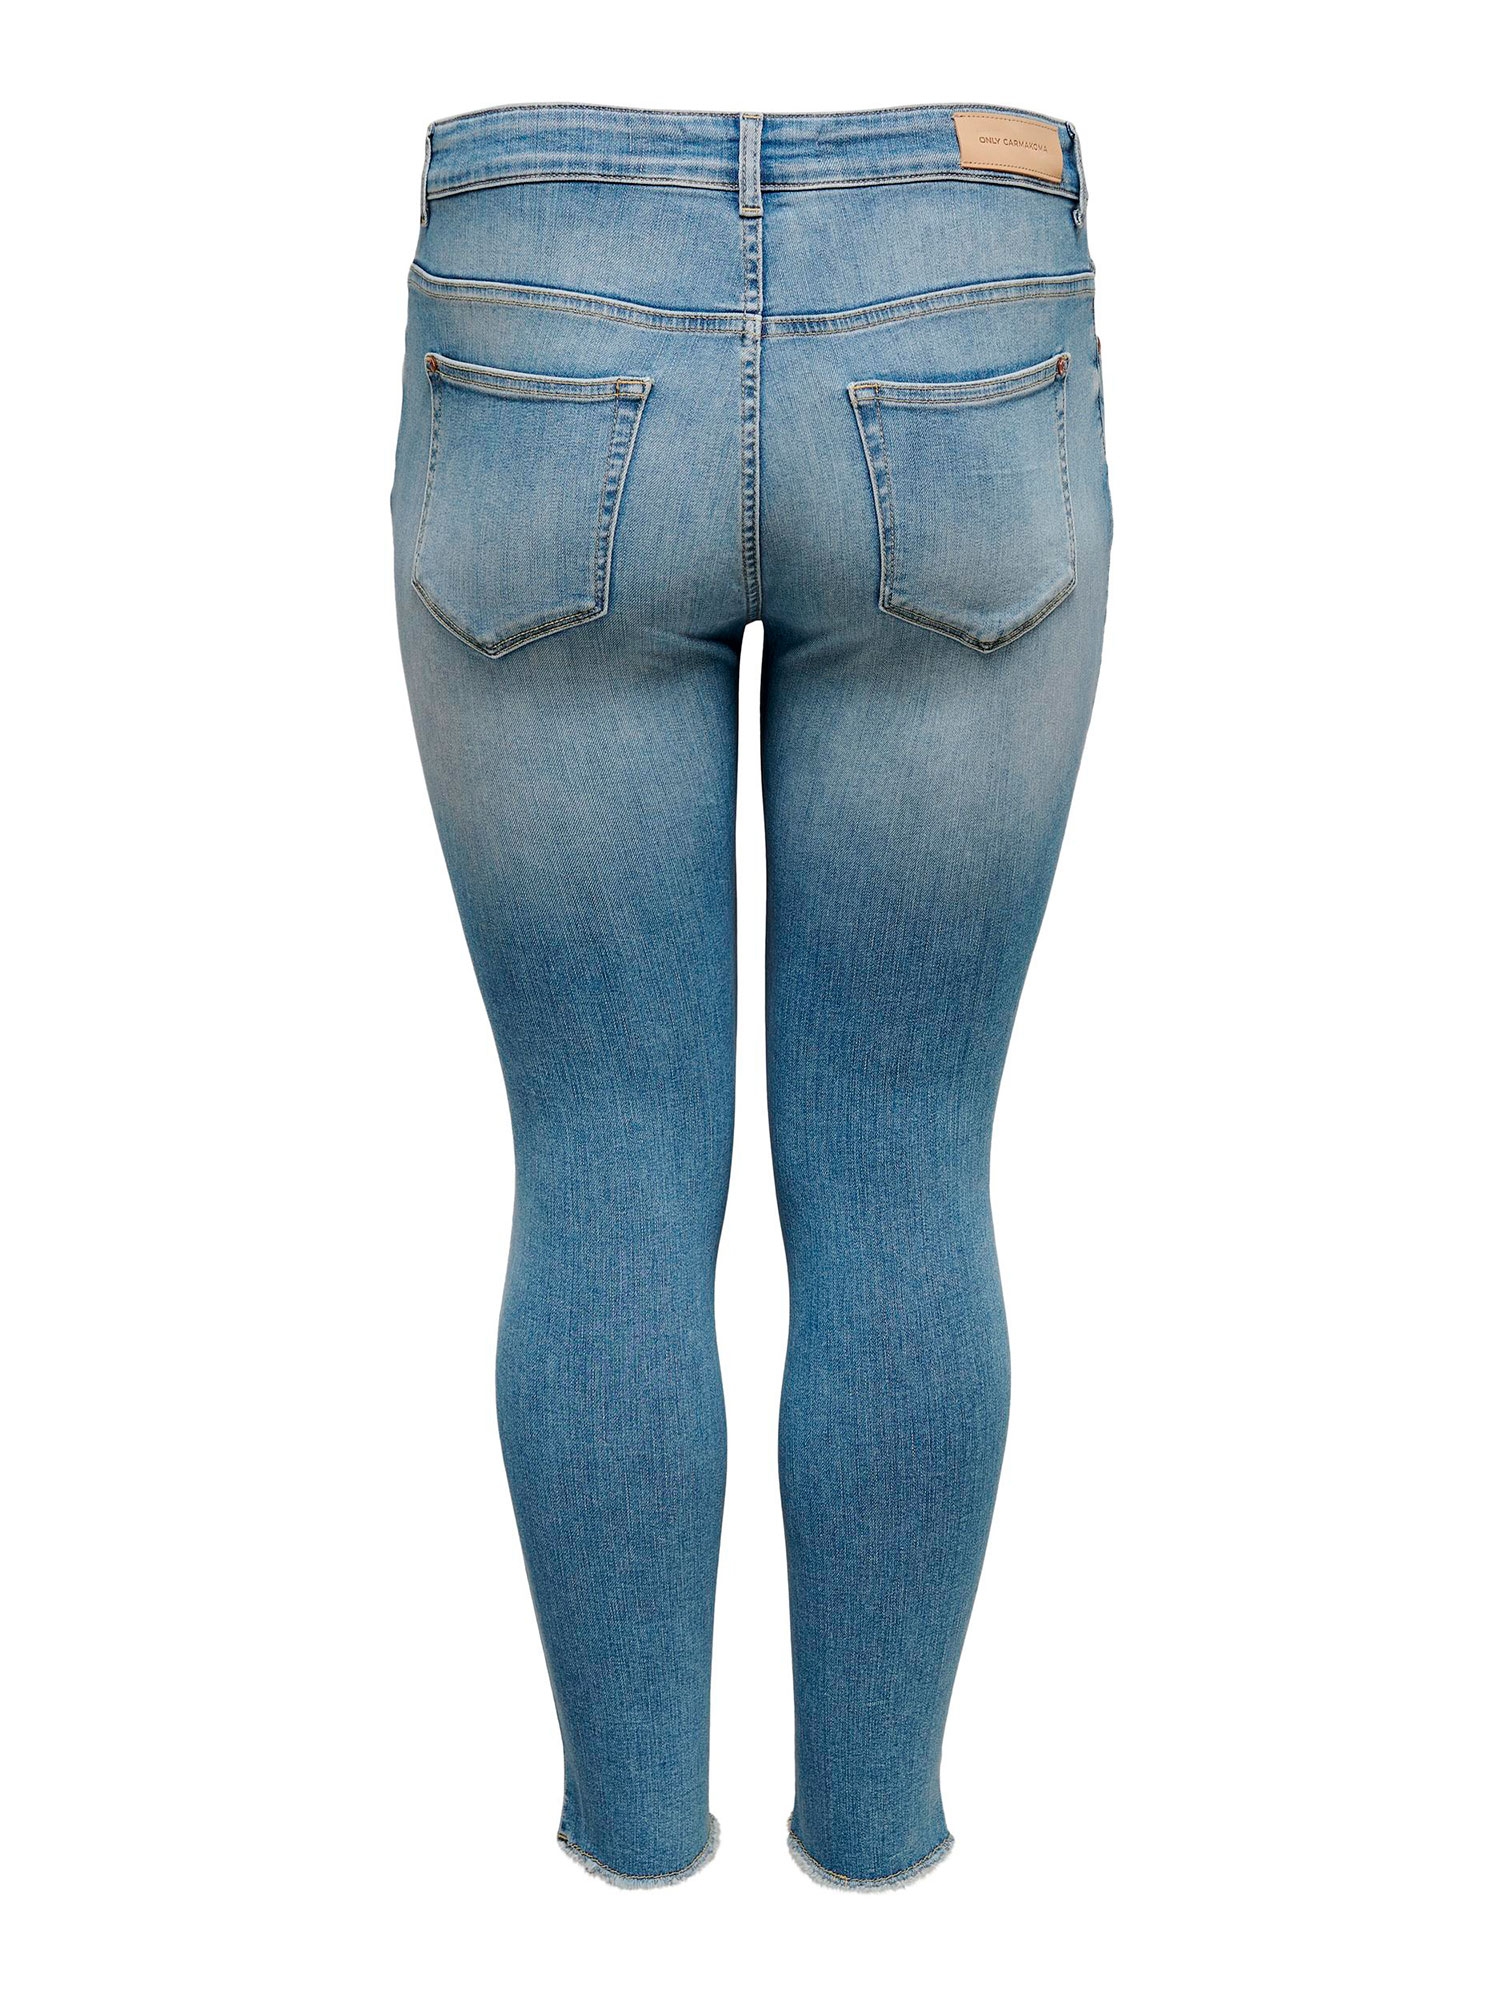 WILLY - Lyse stretch jeans med frynser ved anklen fra Only Carmakoma